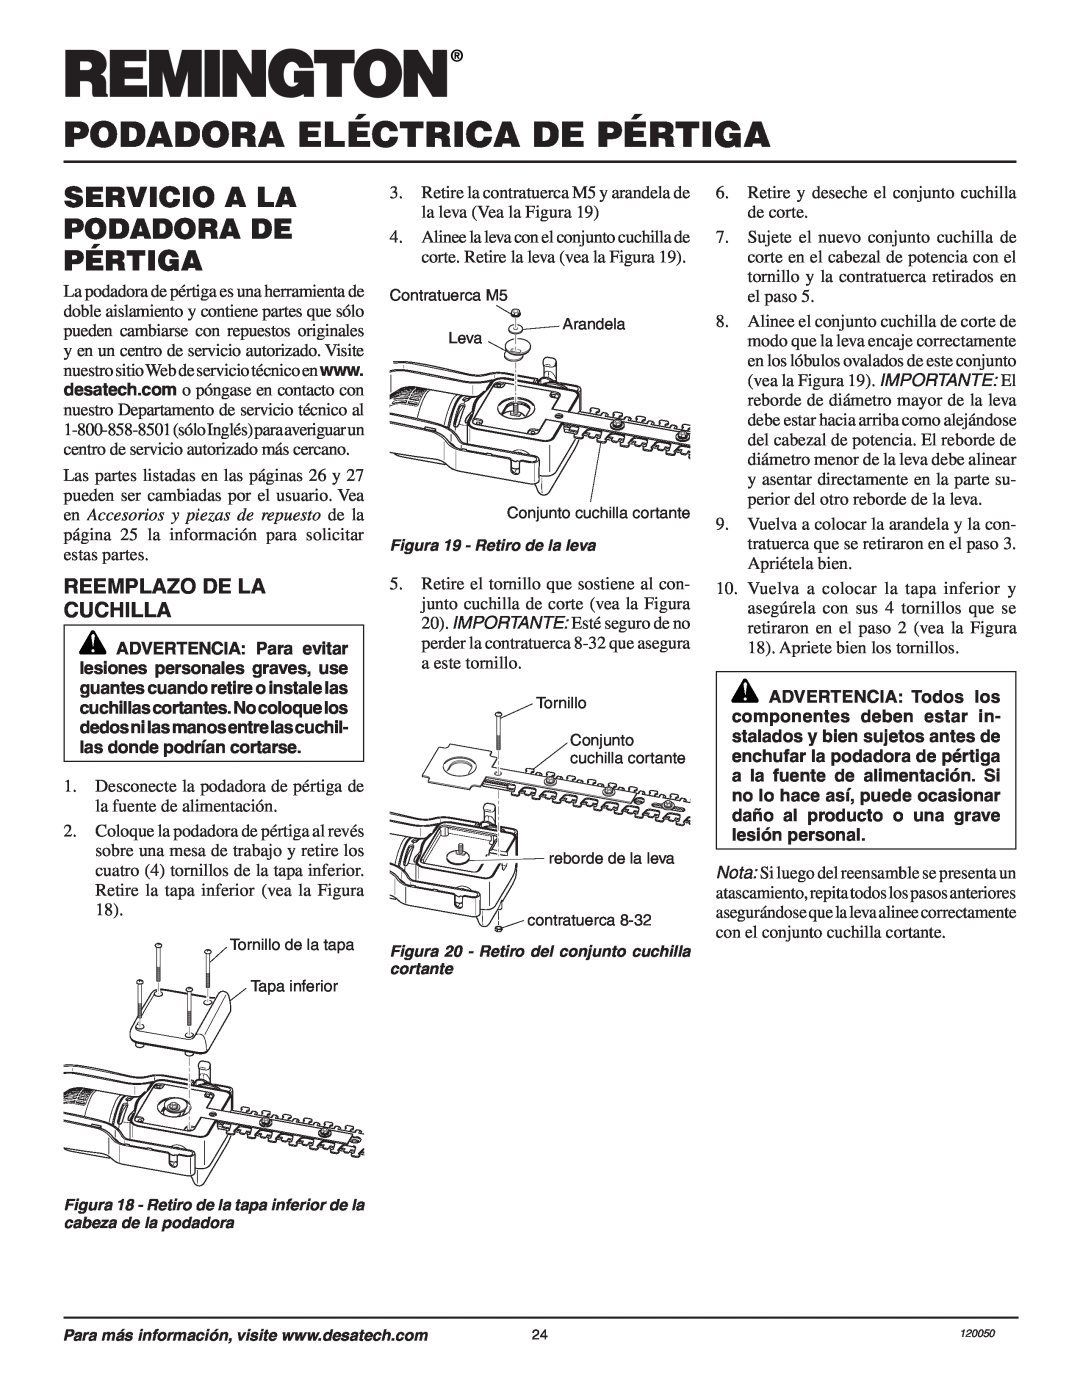 Remington AT3017BCA owner manual Servicio A La Podadora De Pértiga, Podadora Eléctrica De Pértiga, Reemplazo De La Cuchilla 